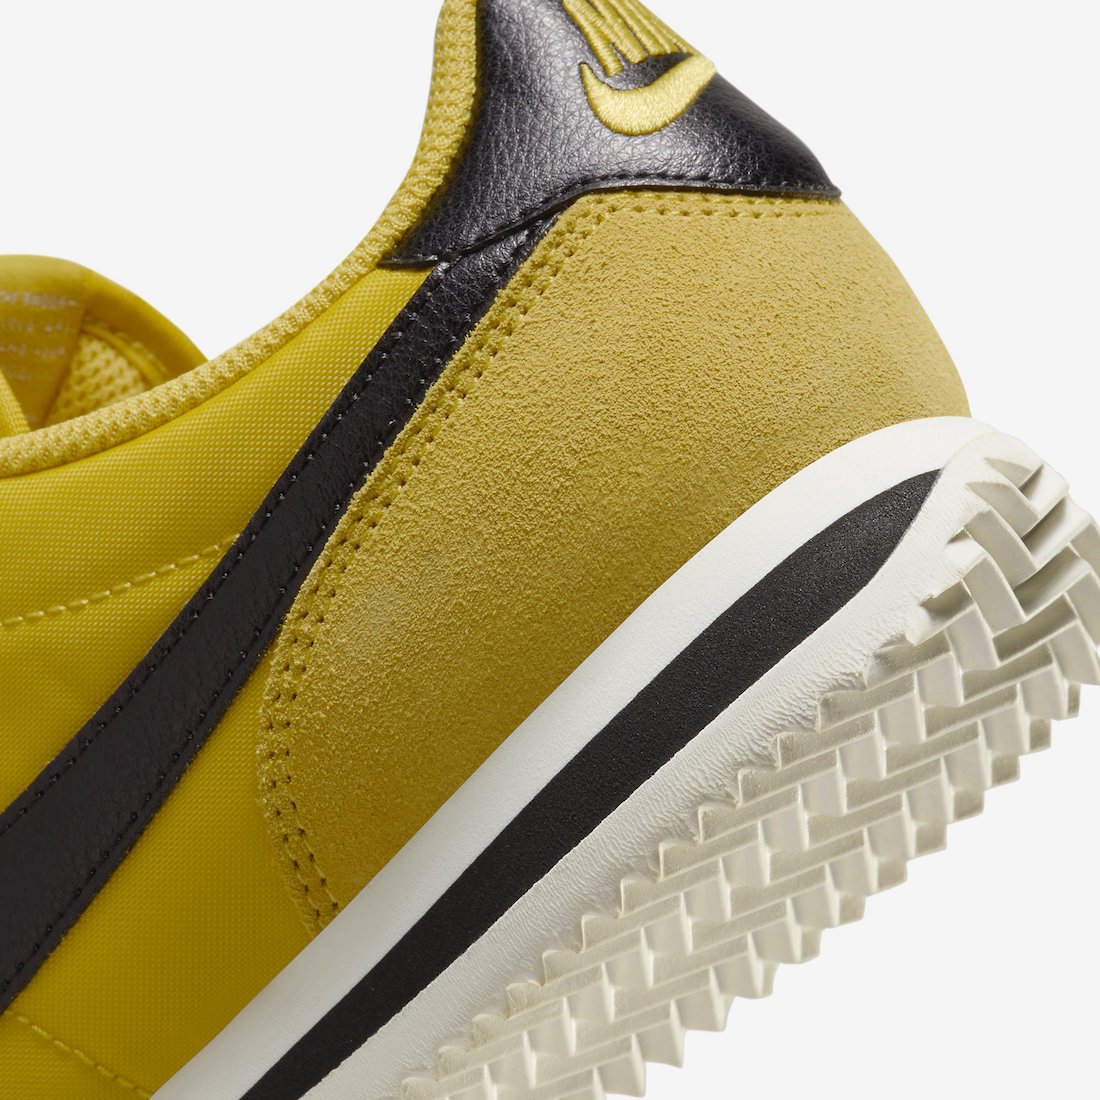 Nike Cortez Vivid Sulfur DZ2795-700 Release Date | SneakerFiles